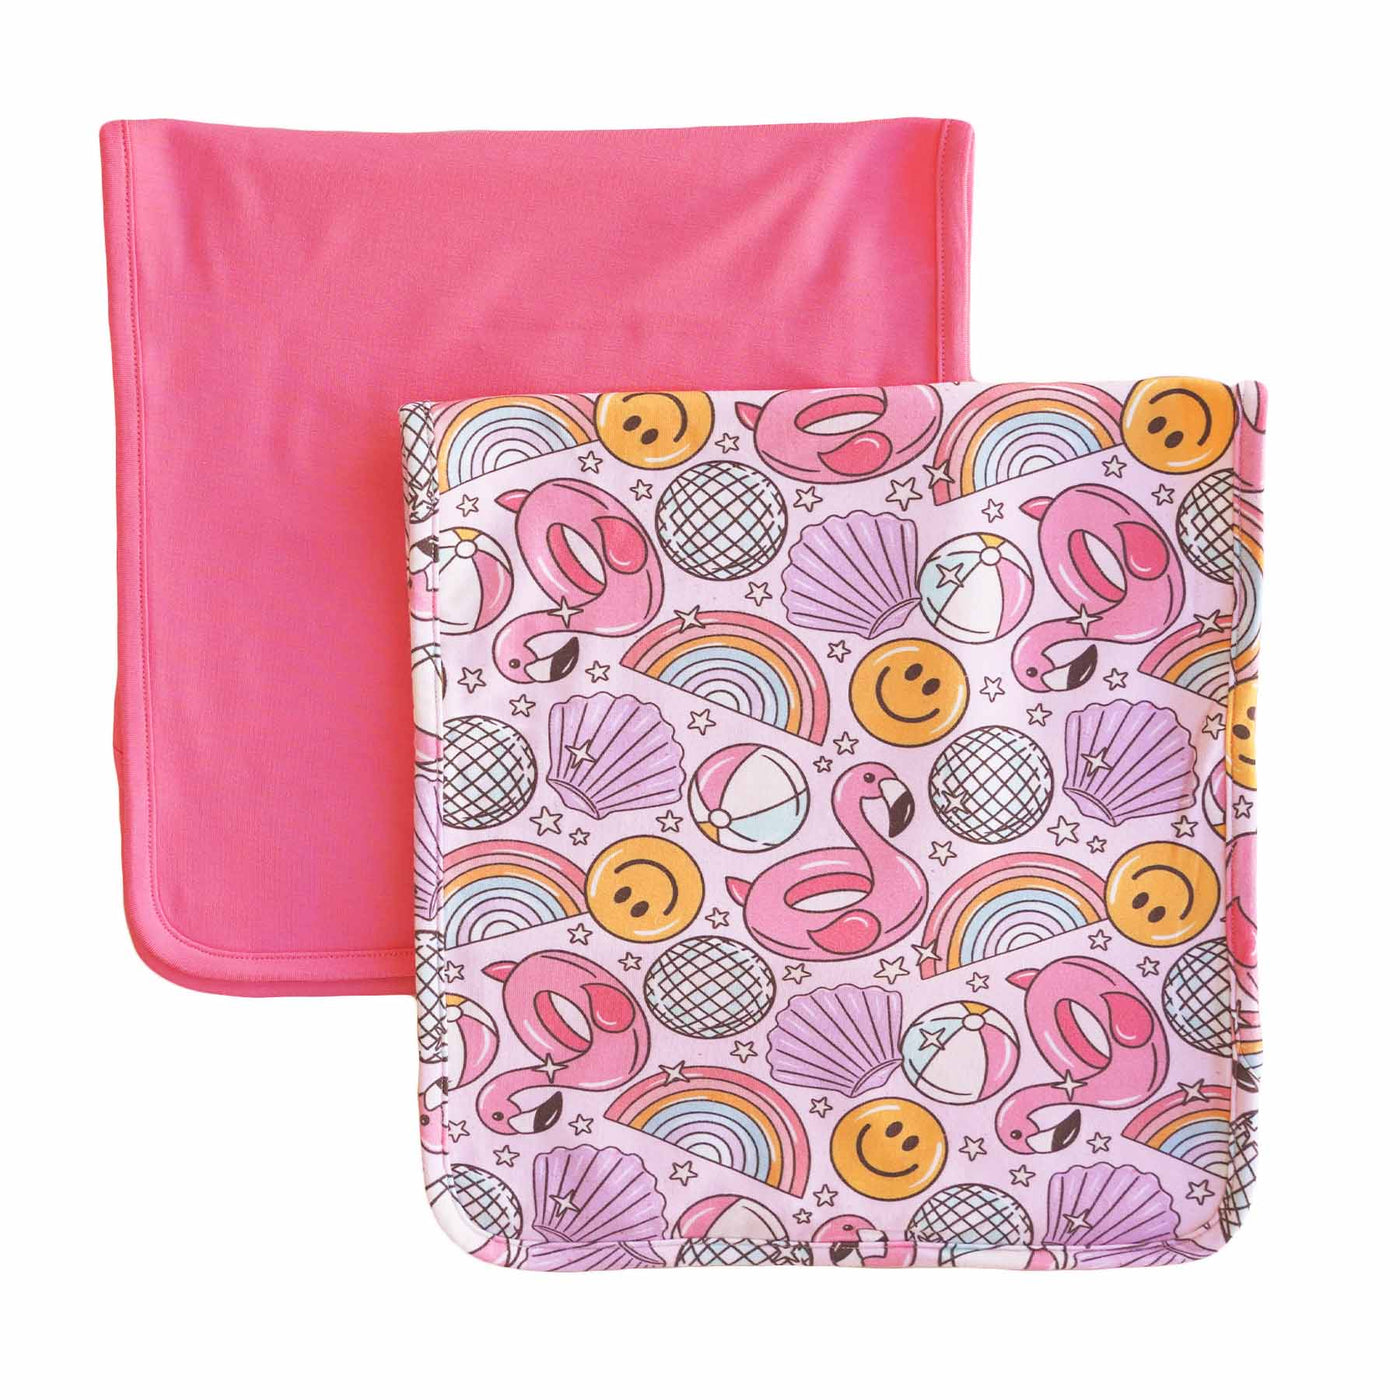 floatie friends pink burp cloth set